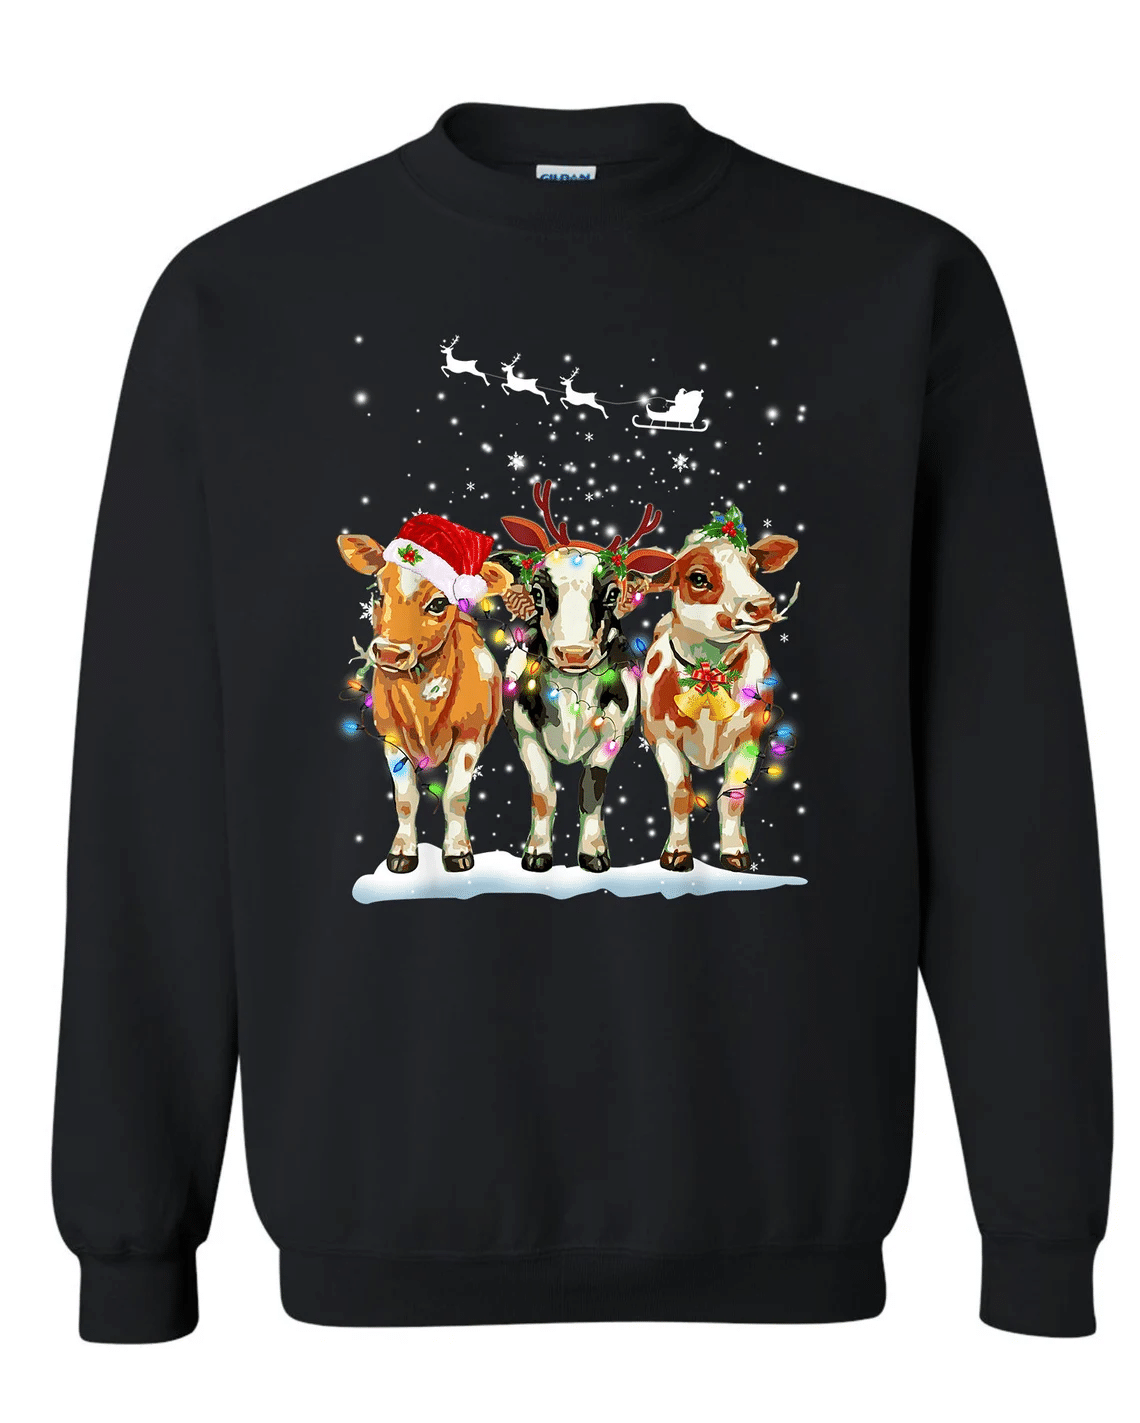 Cows Christmas Sweatshirt Style: Sweatshirt, Color: Black